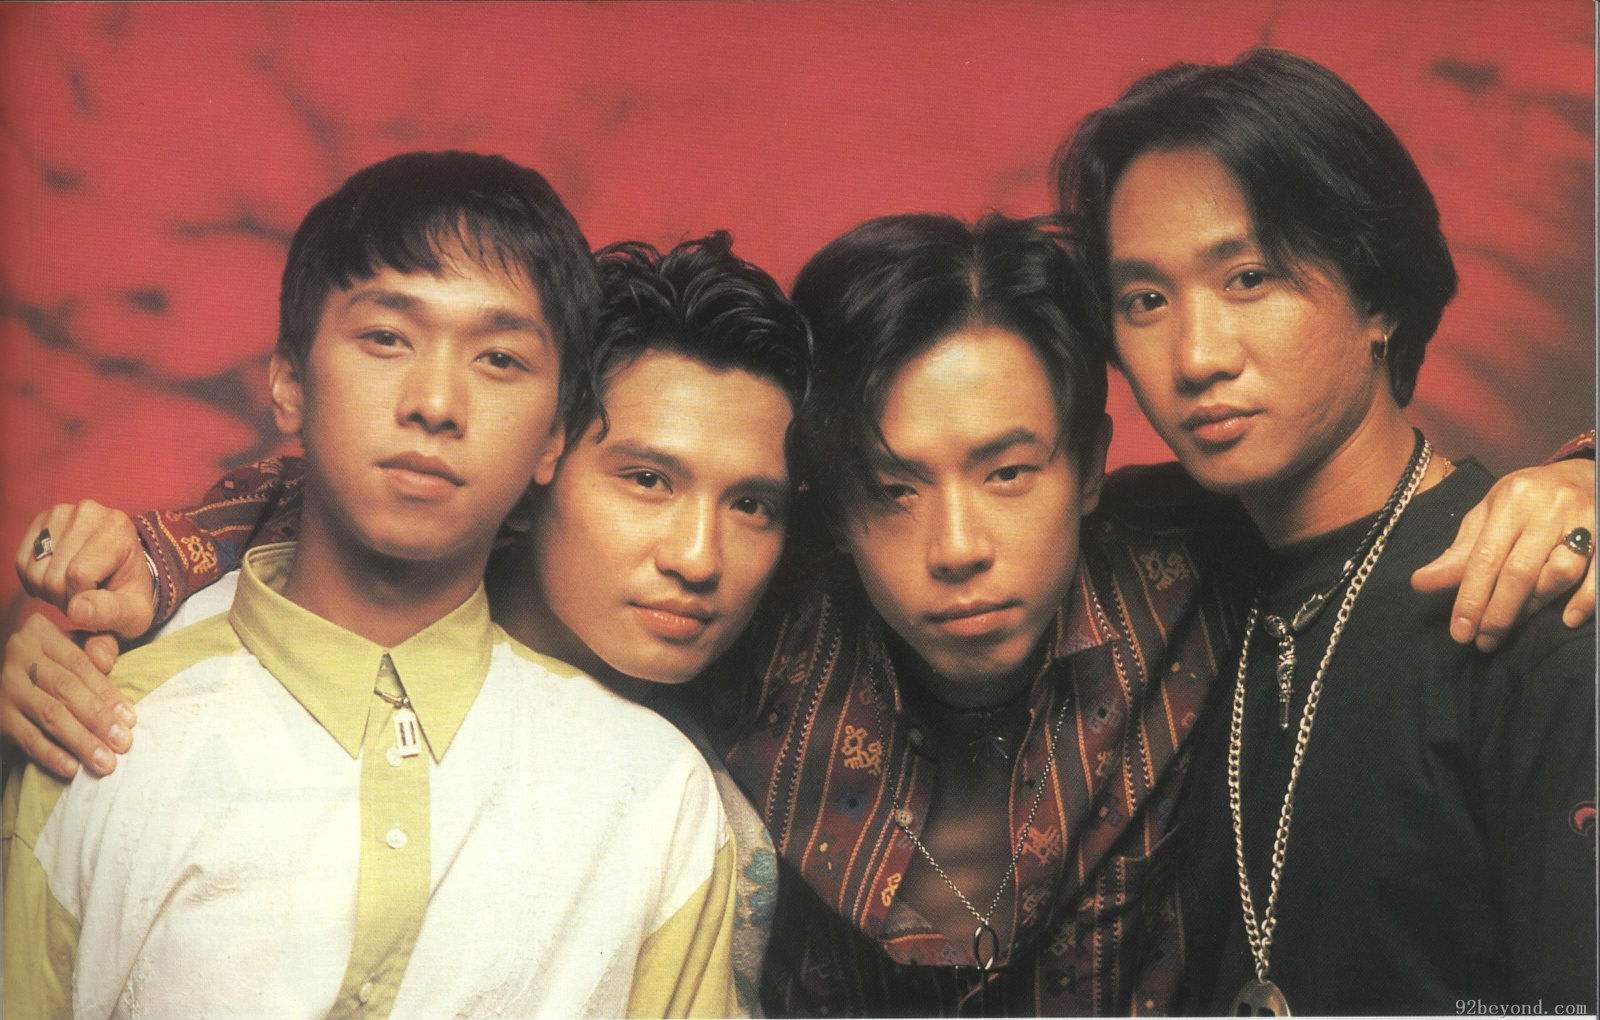 beyond是华语乐坛中最知名的一支乐队,主要成员有四名,分别是黄家驹